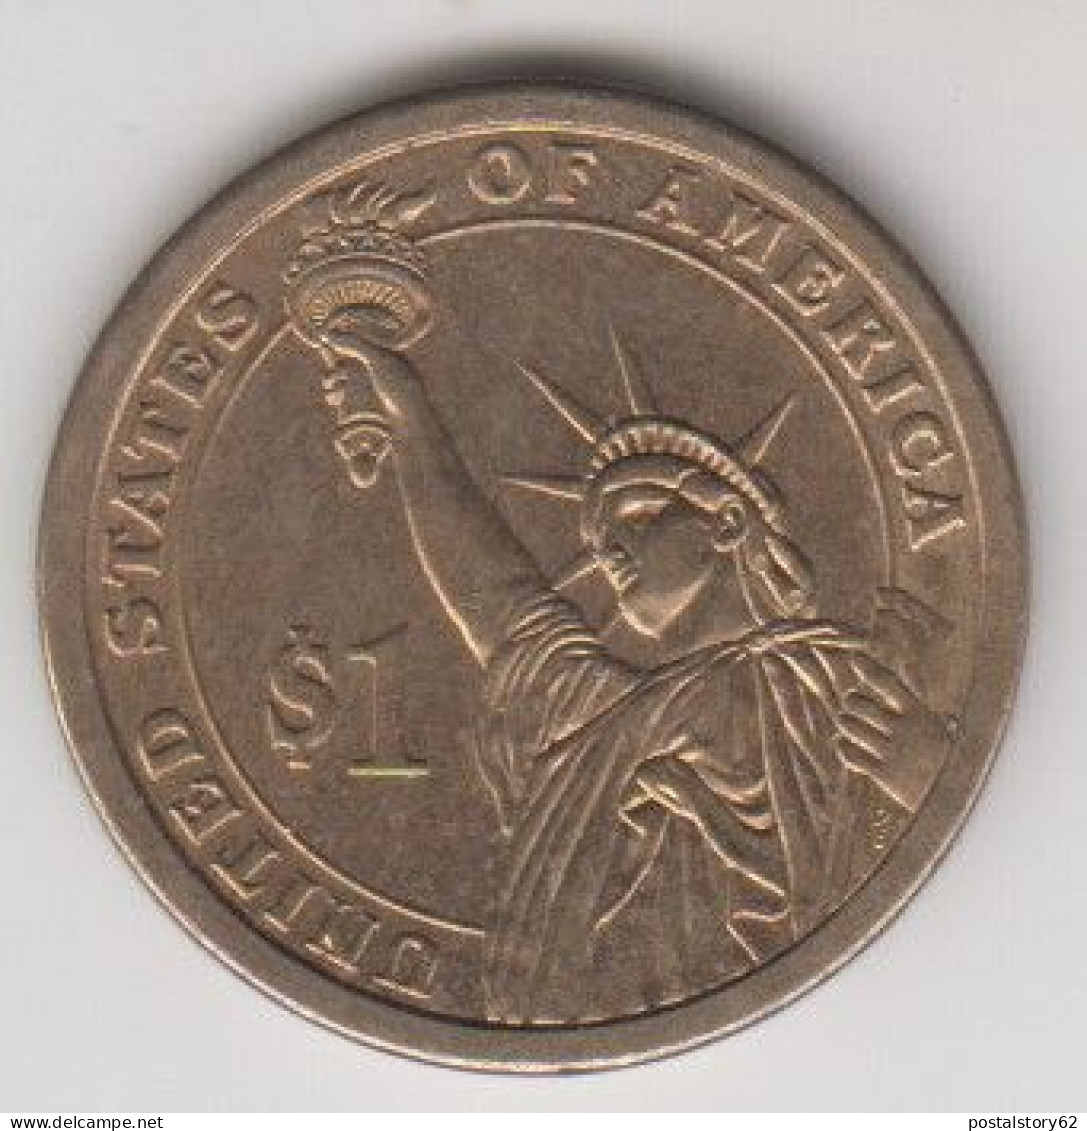 1 Dollaro, James Madison - Presidenti - - Gedenkmünzen